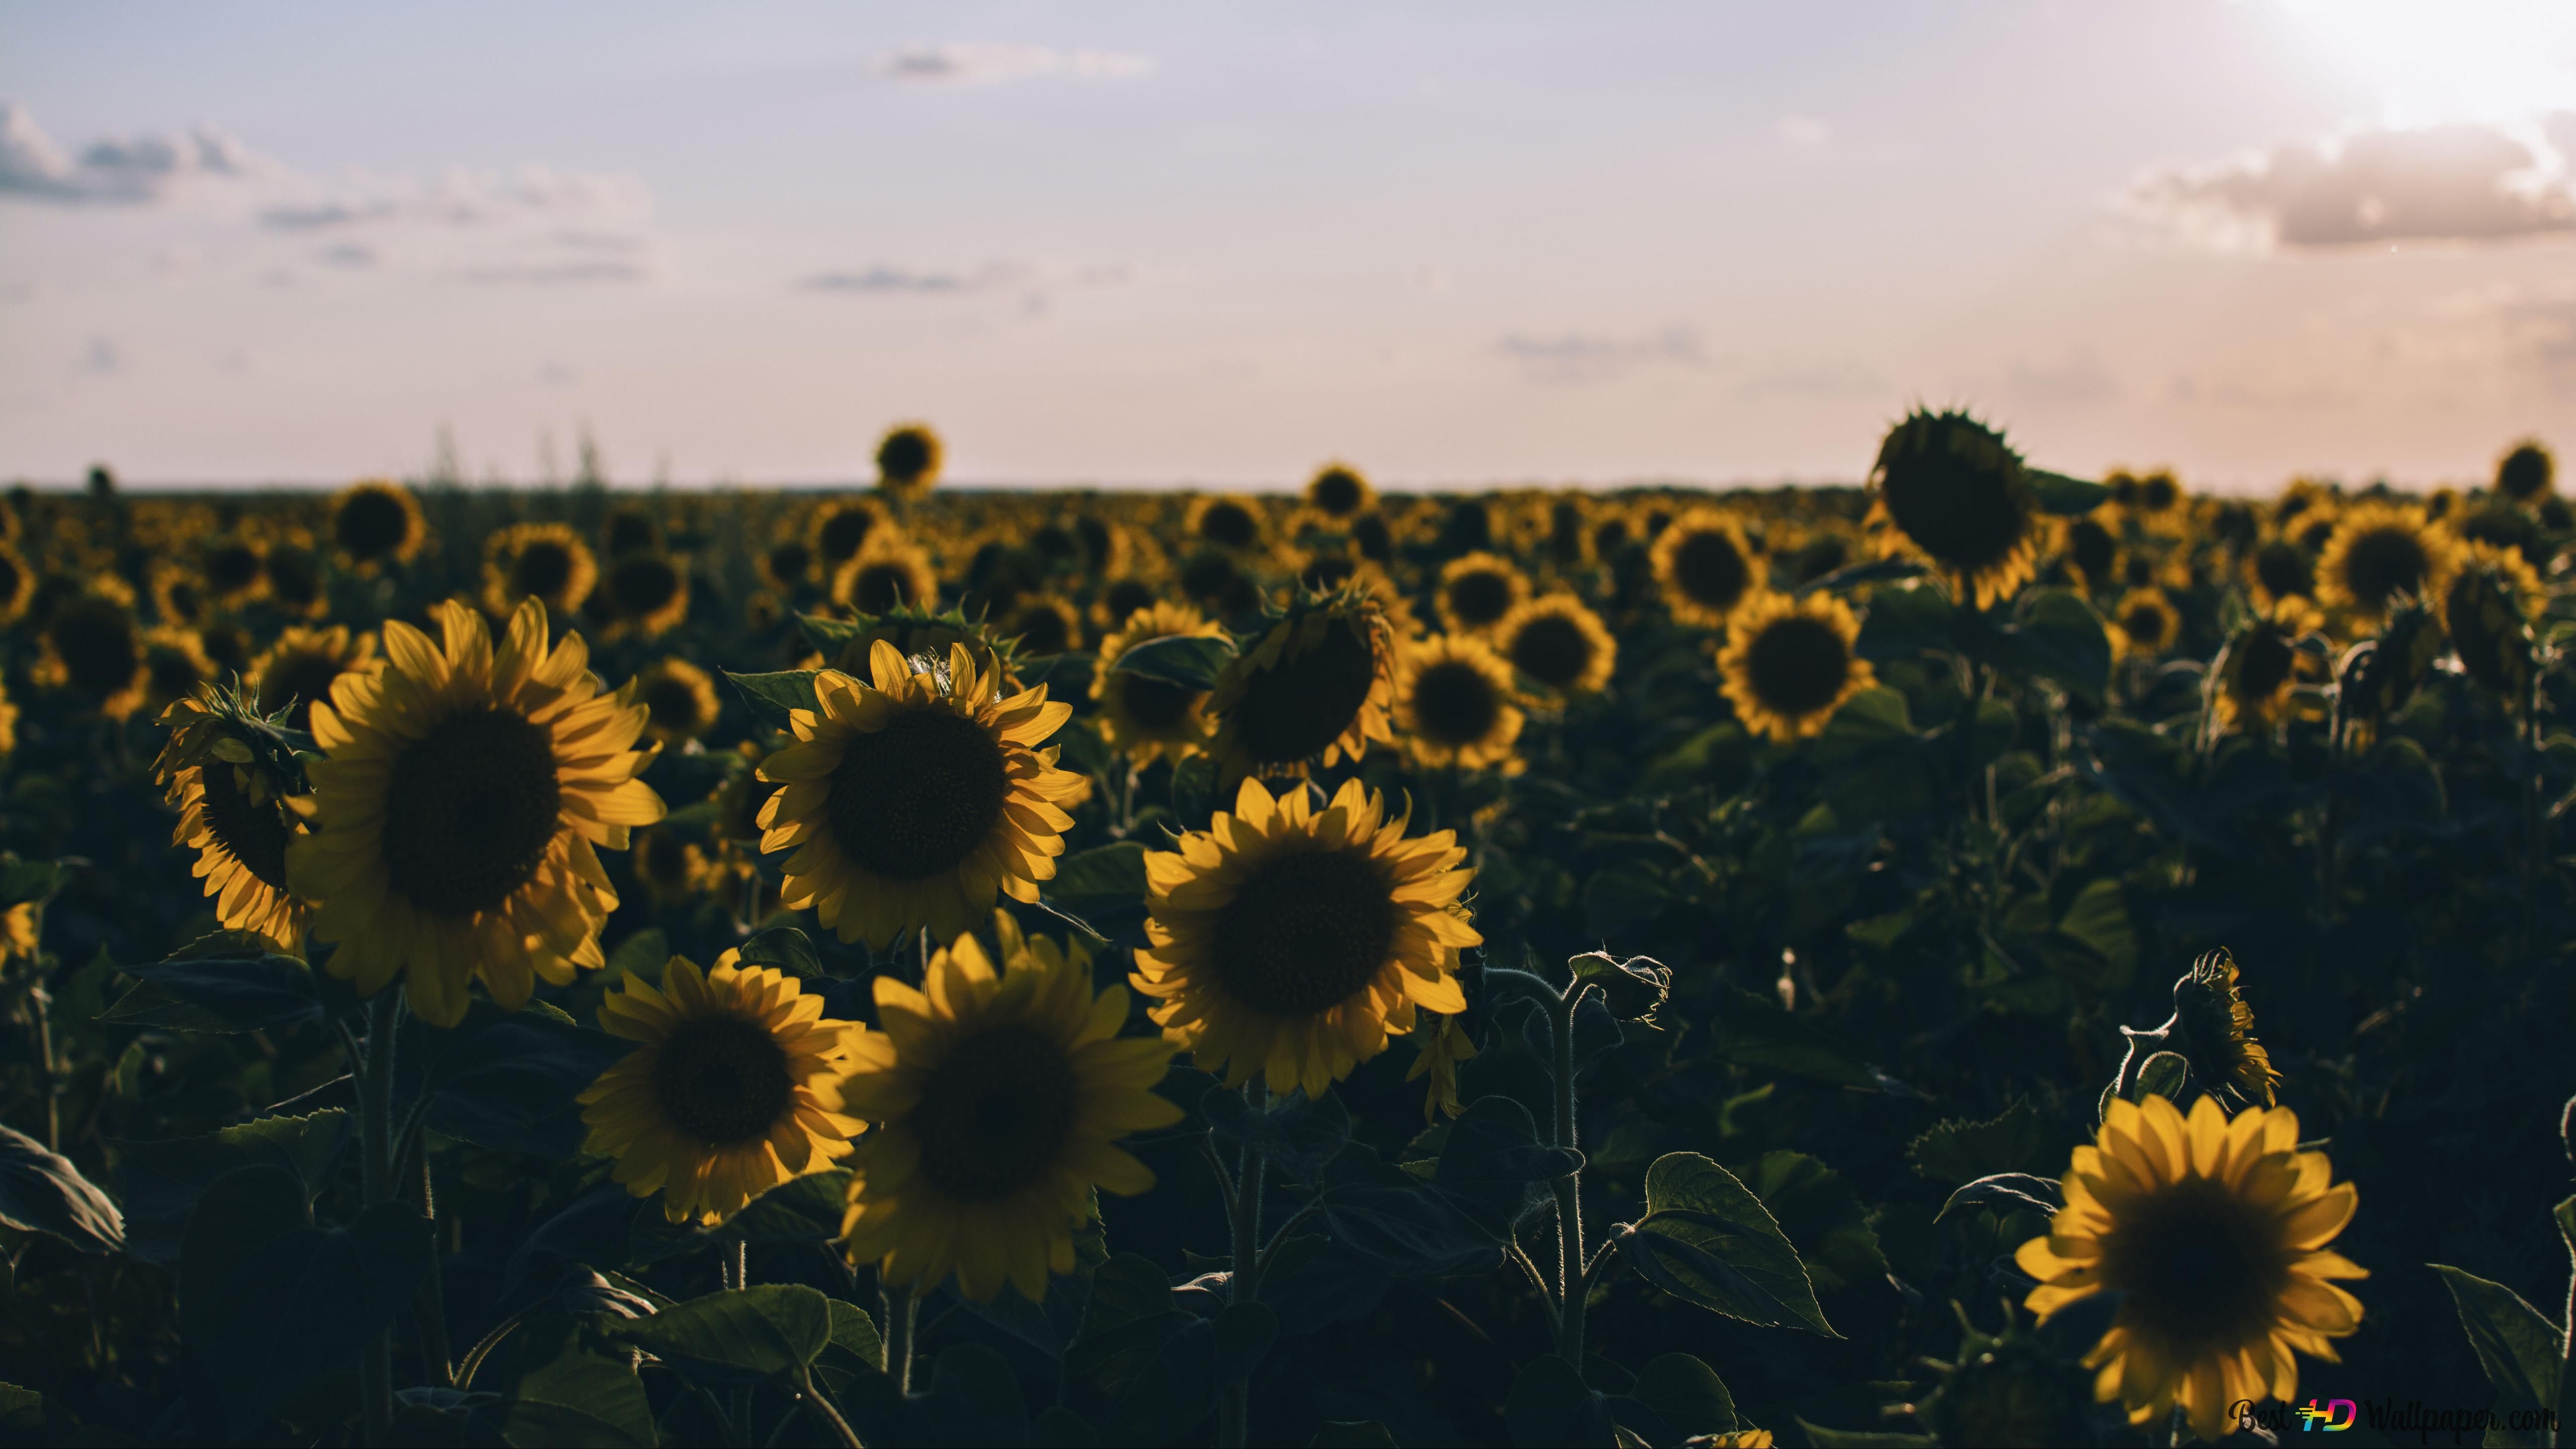 Sunflower field background 4K wallpaper download